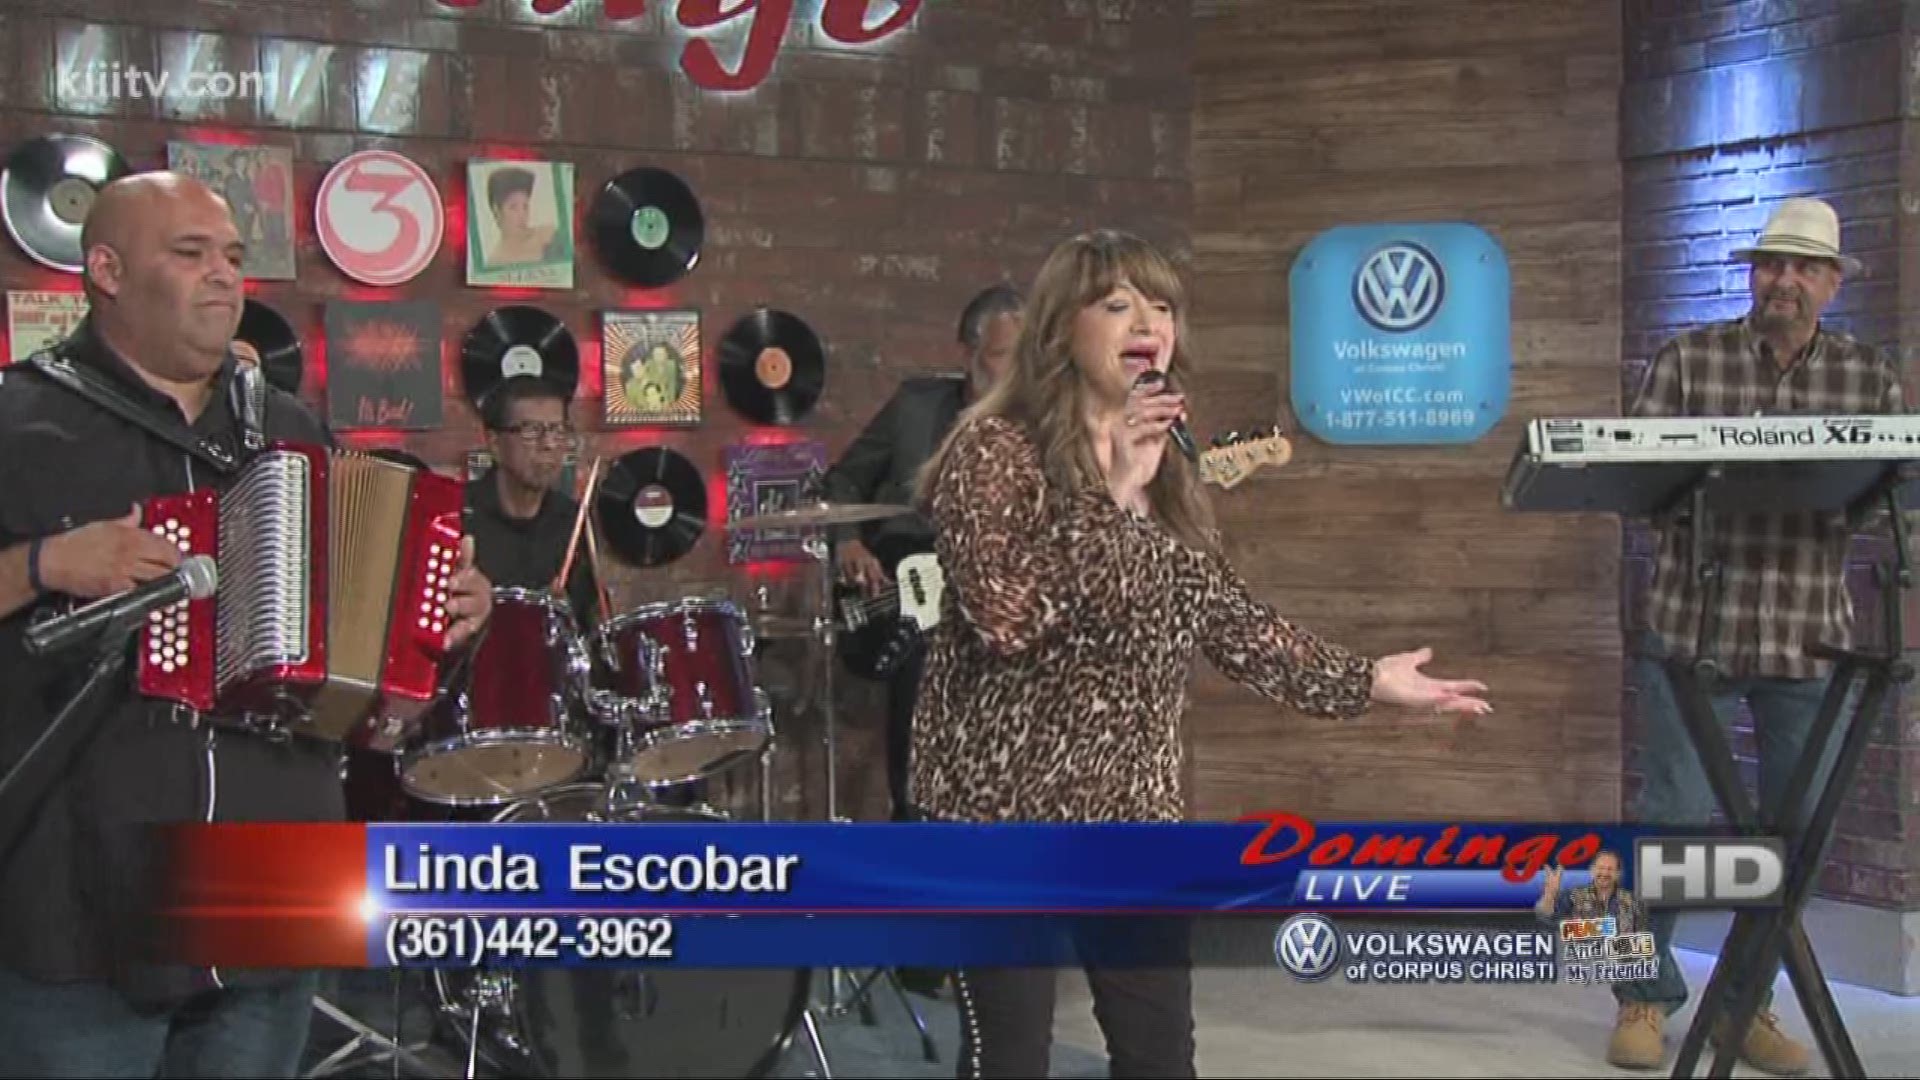 Linda Escobar performing "Dejanme Vivir Mi Vida" on Domingo Live.